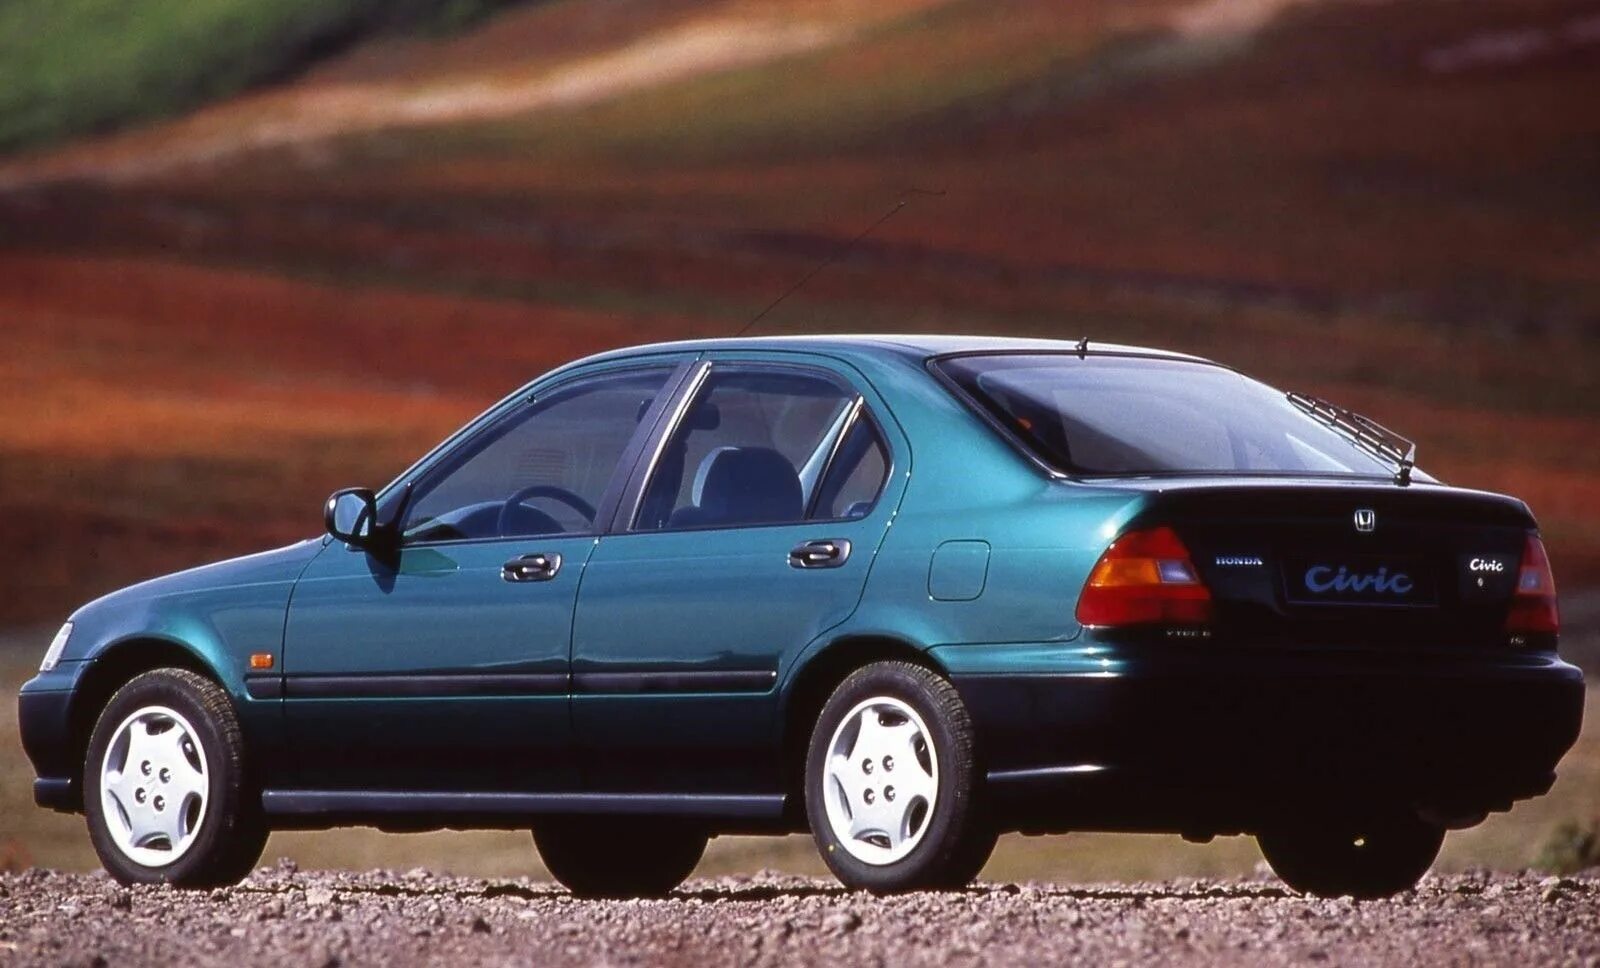 Honda Civic 6 1996. Хонда Цивик 5 поколения. Honda Civic 5 хэтчбек. Хонда Цивик 5 поколения хэтчбек.